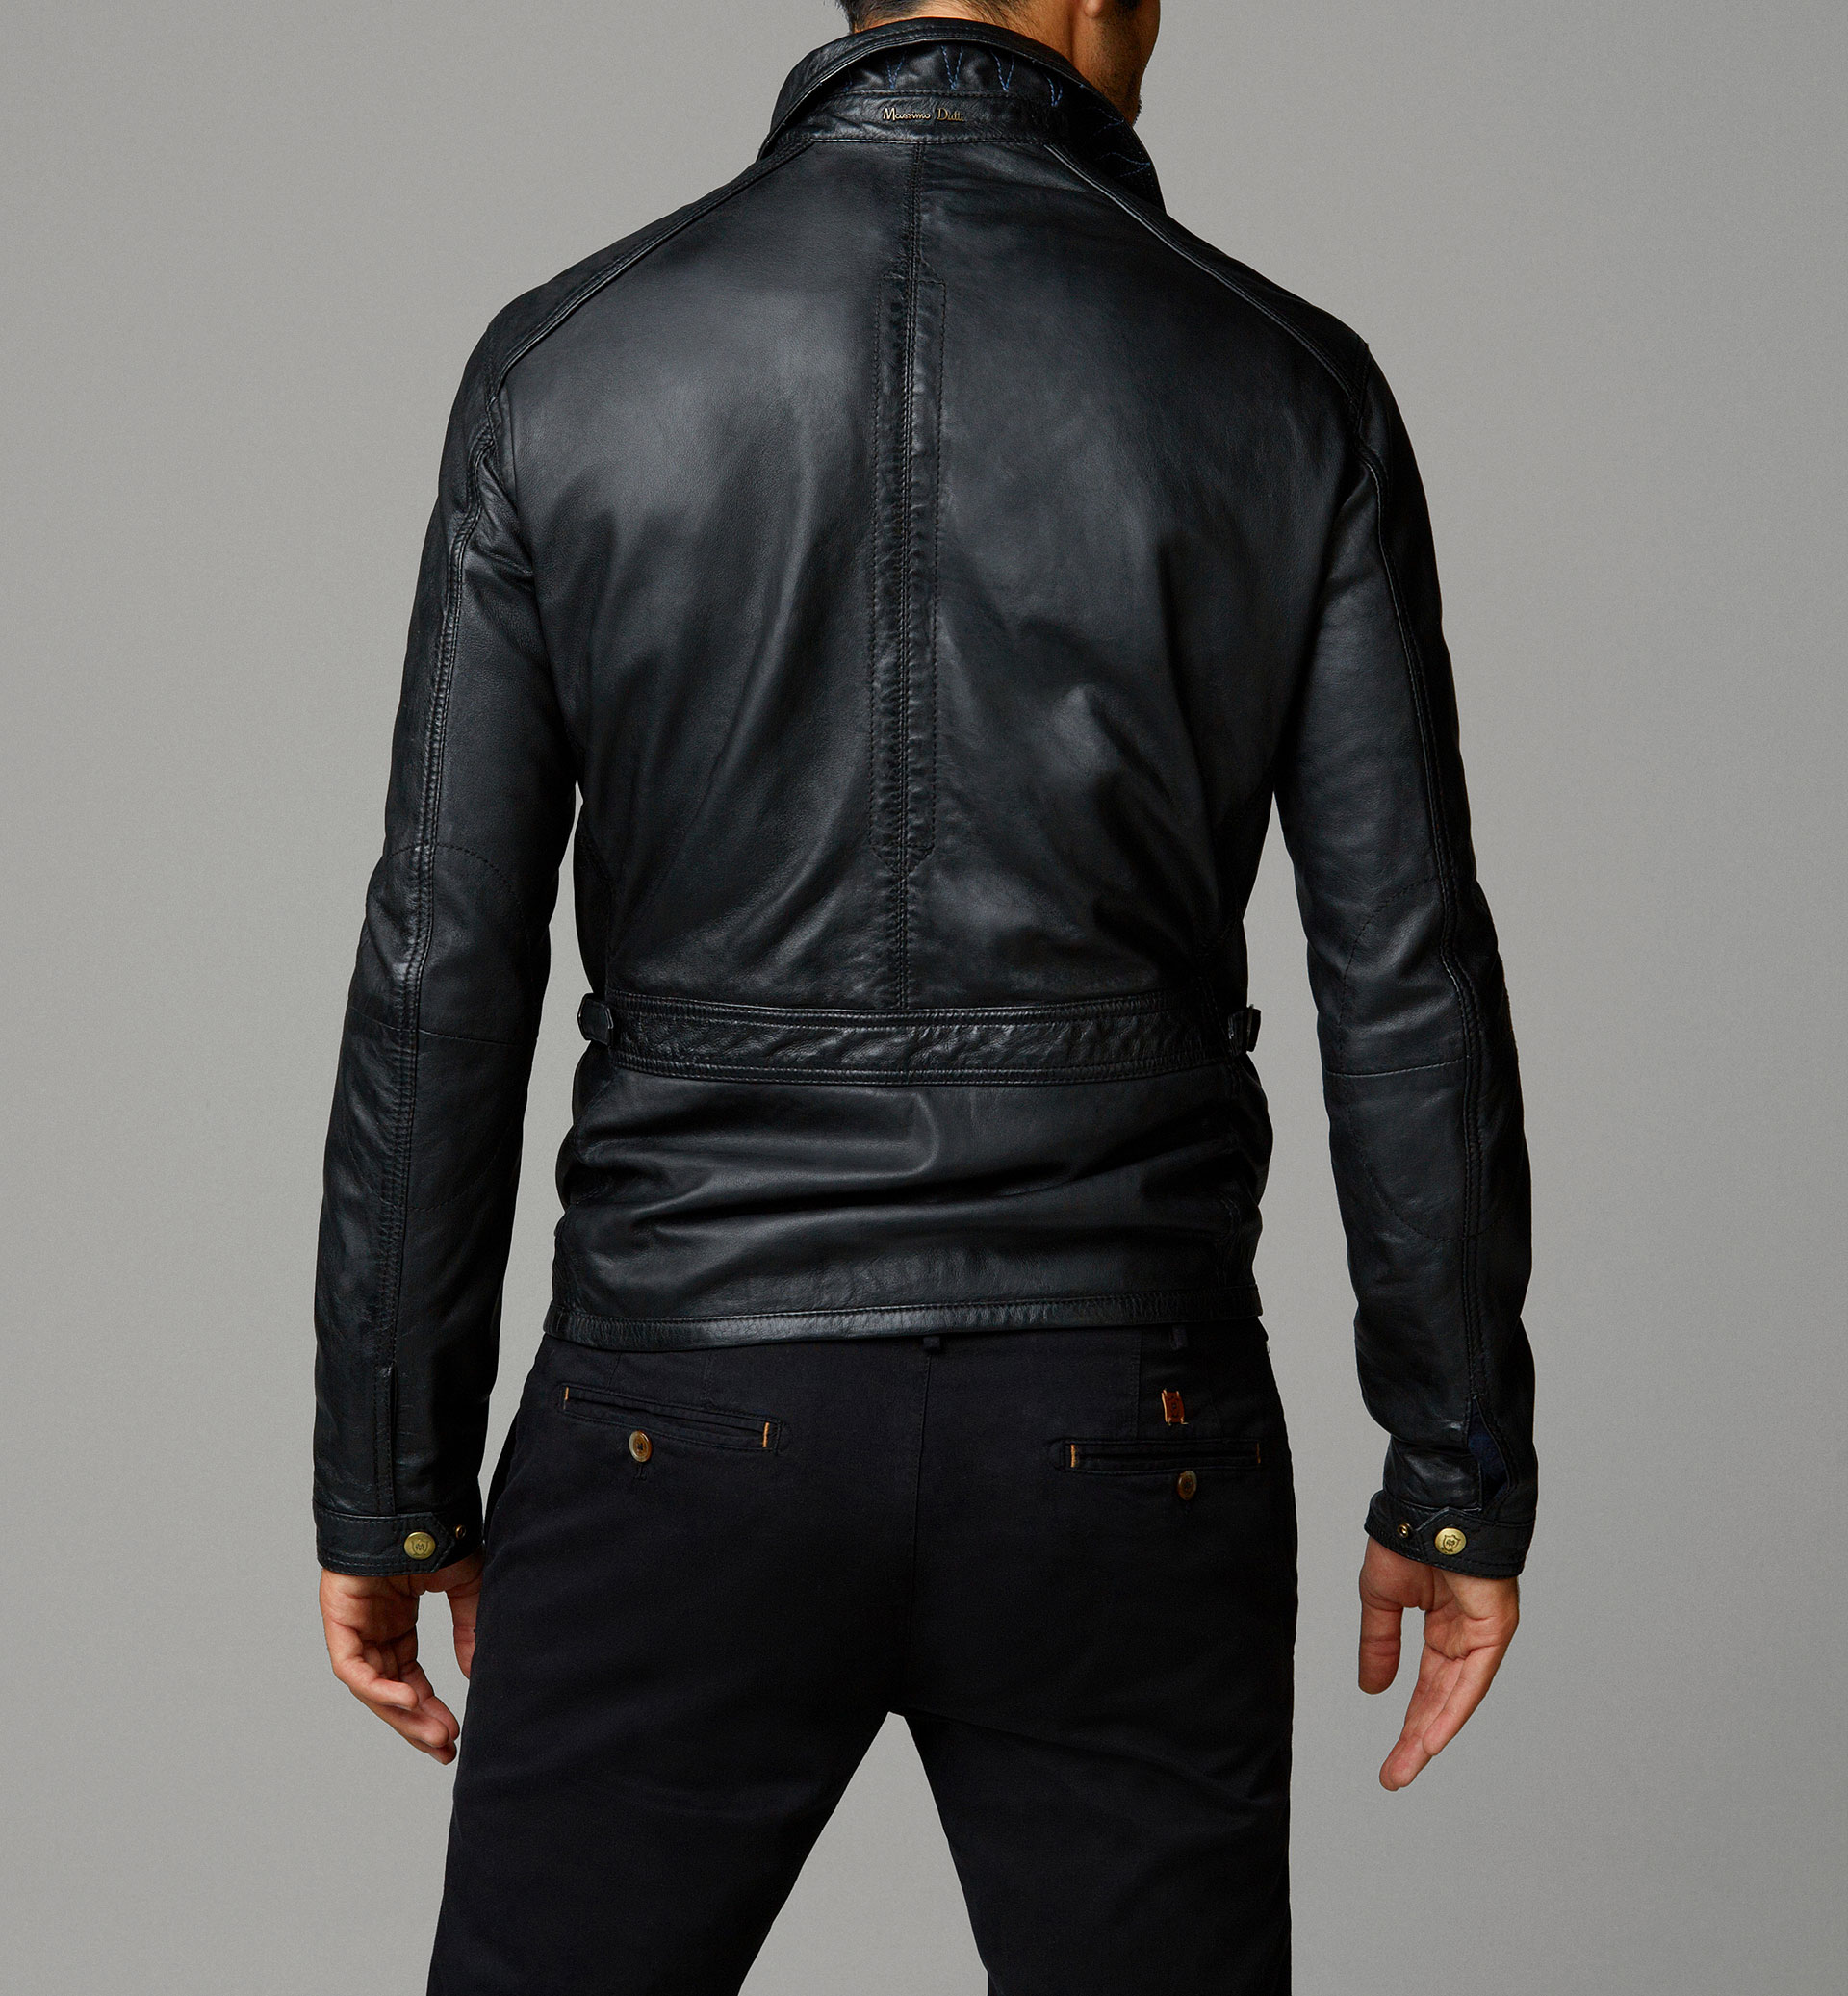 Leather Jacket Season is Coming... : r/malefashionadvice